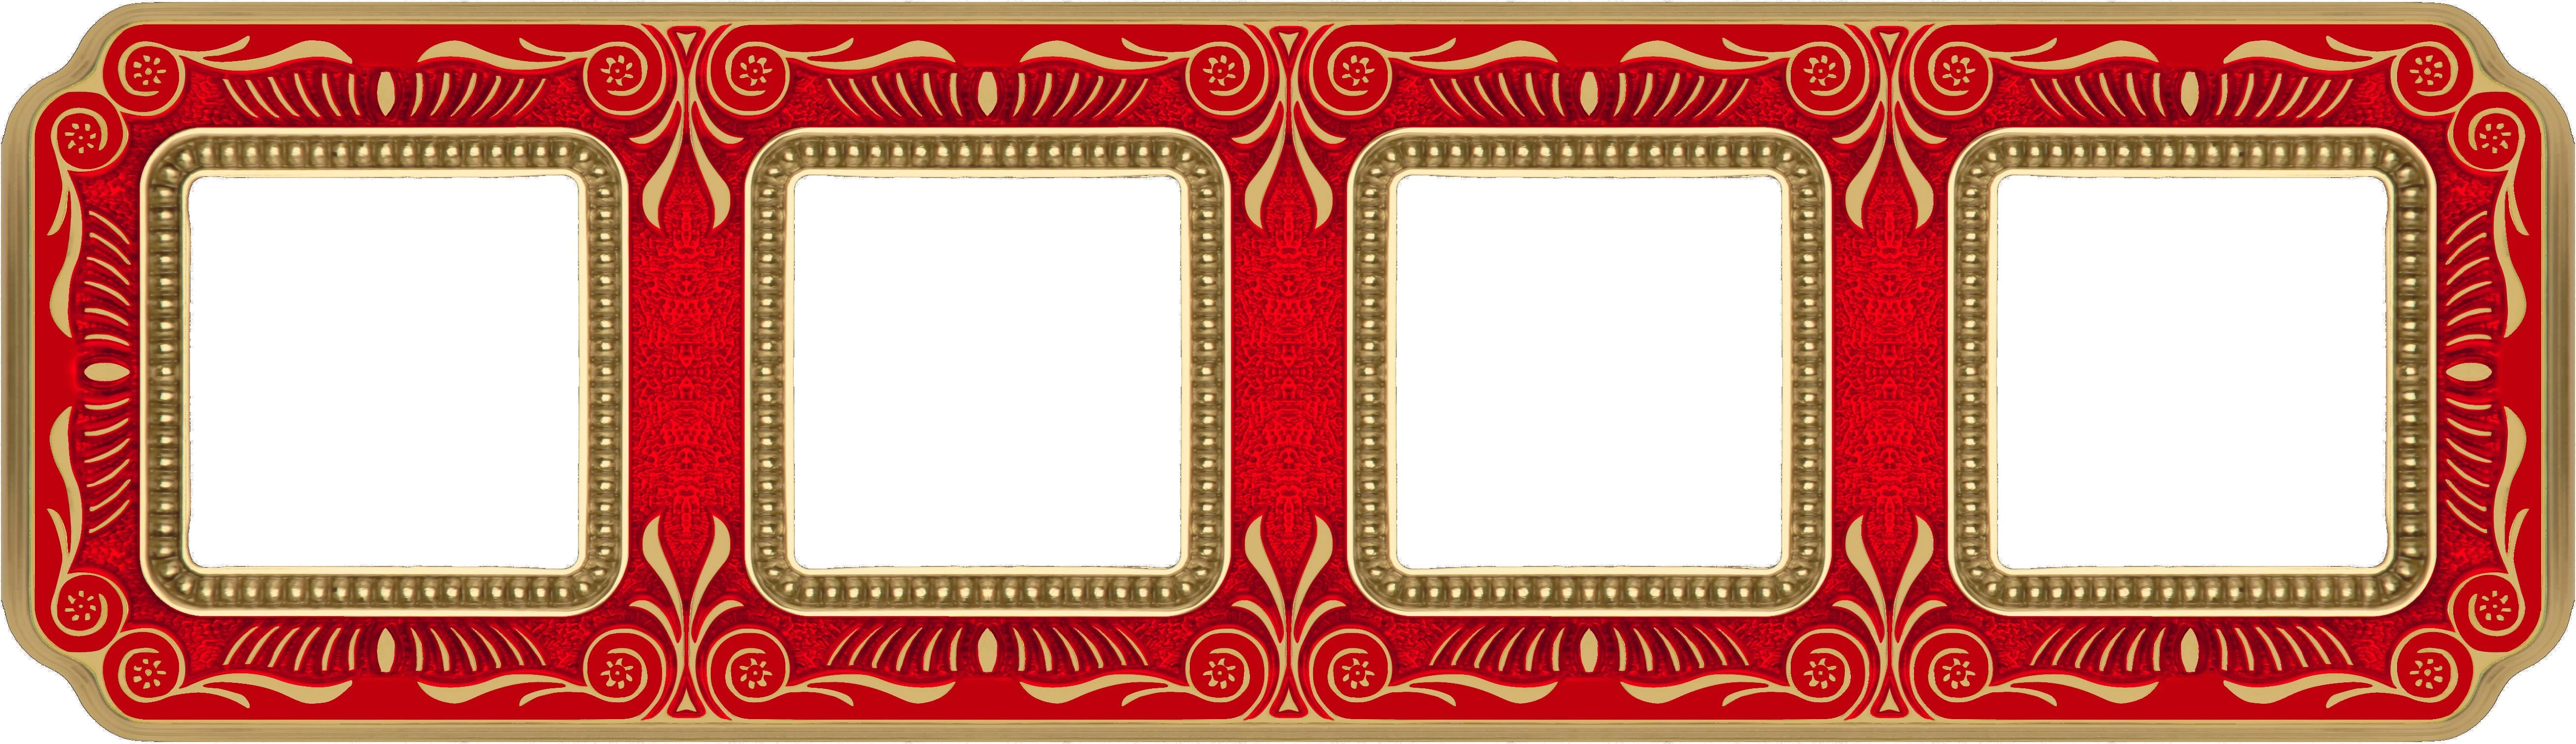  артикул FD01364ROEN название Рамка 4-ая (четверная), цвет Рубиново-красный, Firenze, Fede